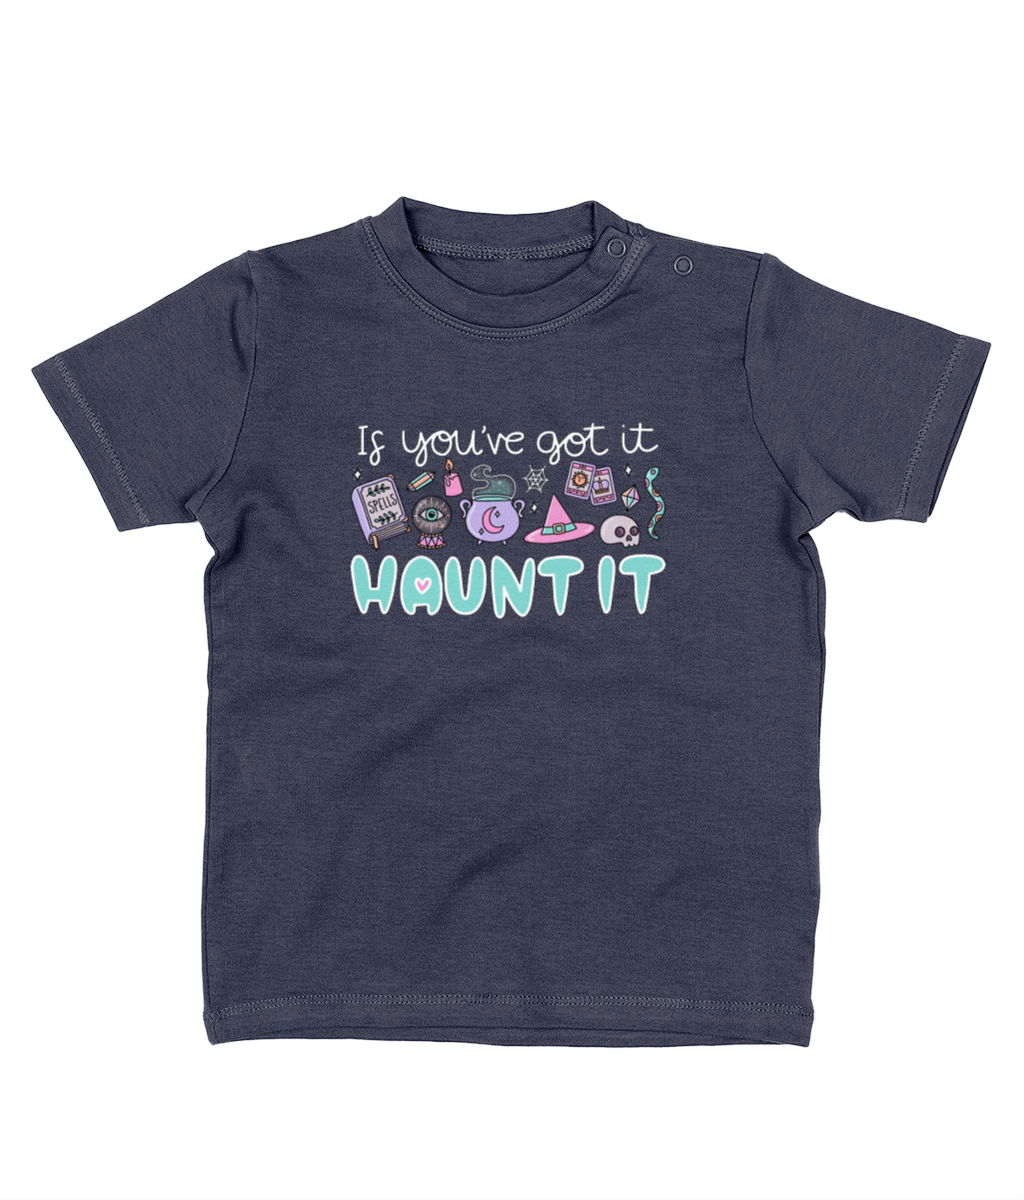 Spellbound Baby T-Shirt - If you've got it...haunt it